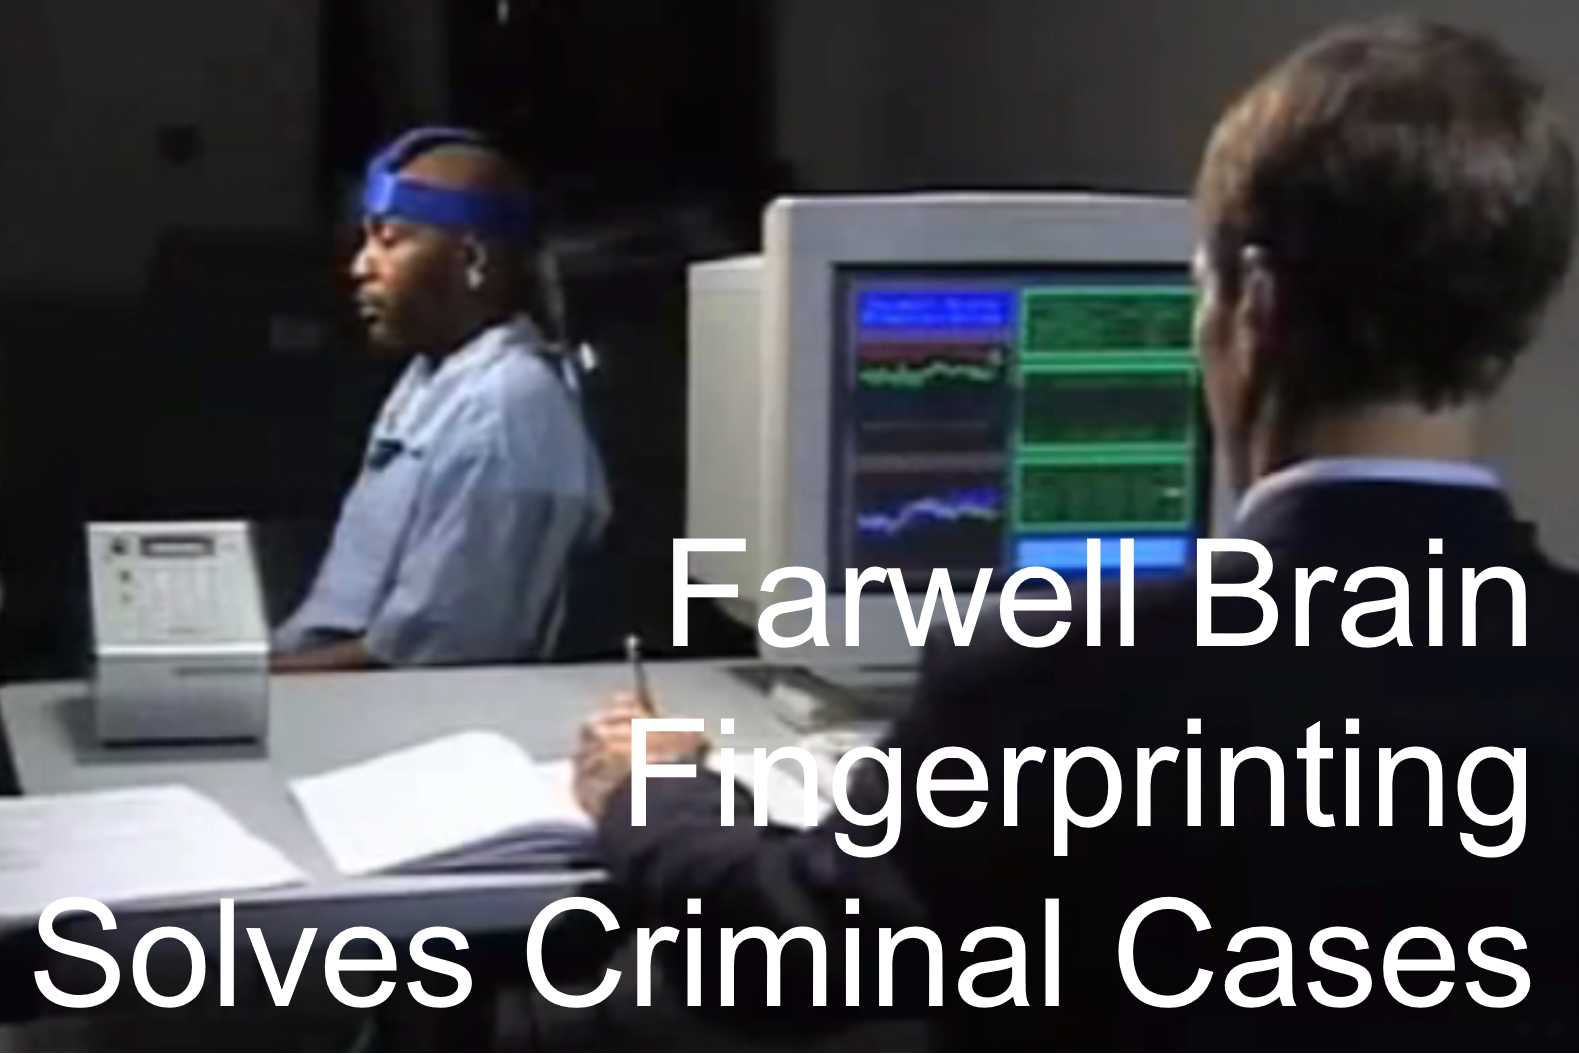 Farwell Brain Fingerprinting Solves Cases Pic
                    and Label